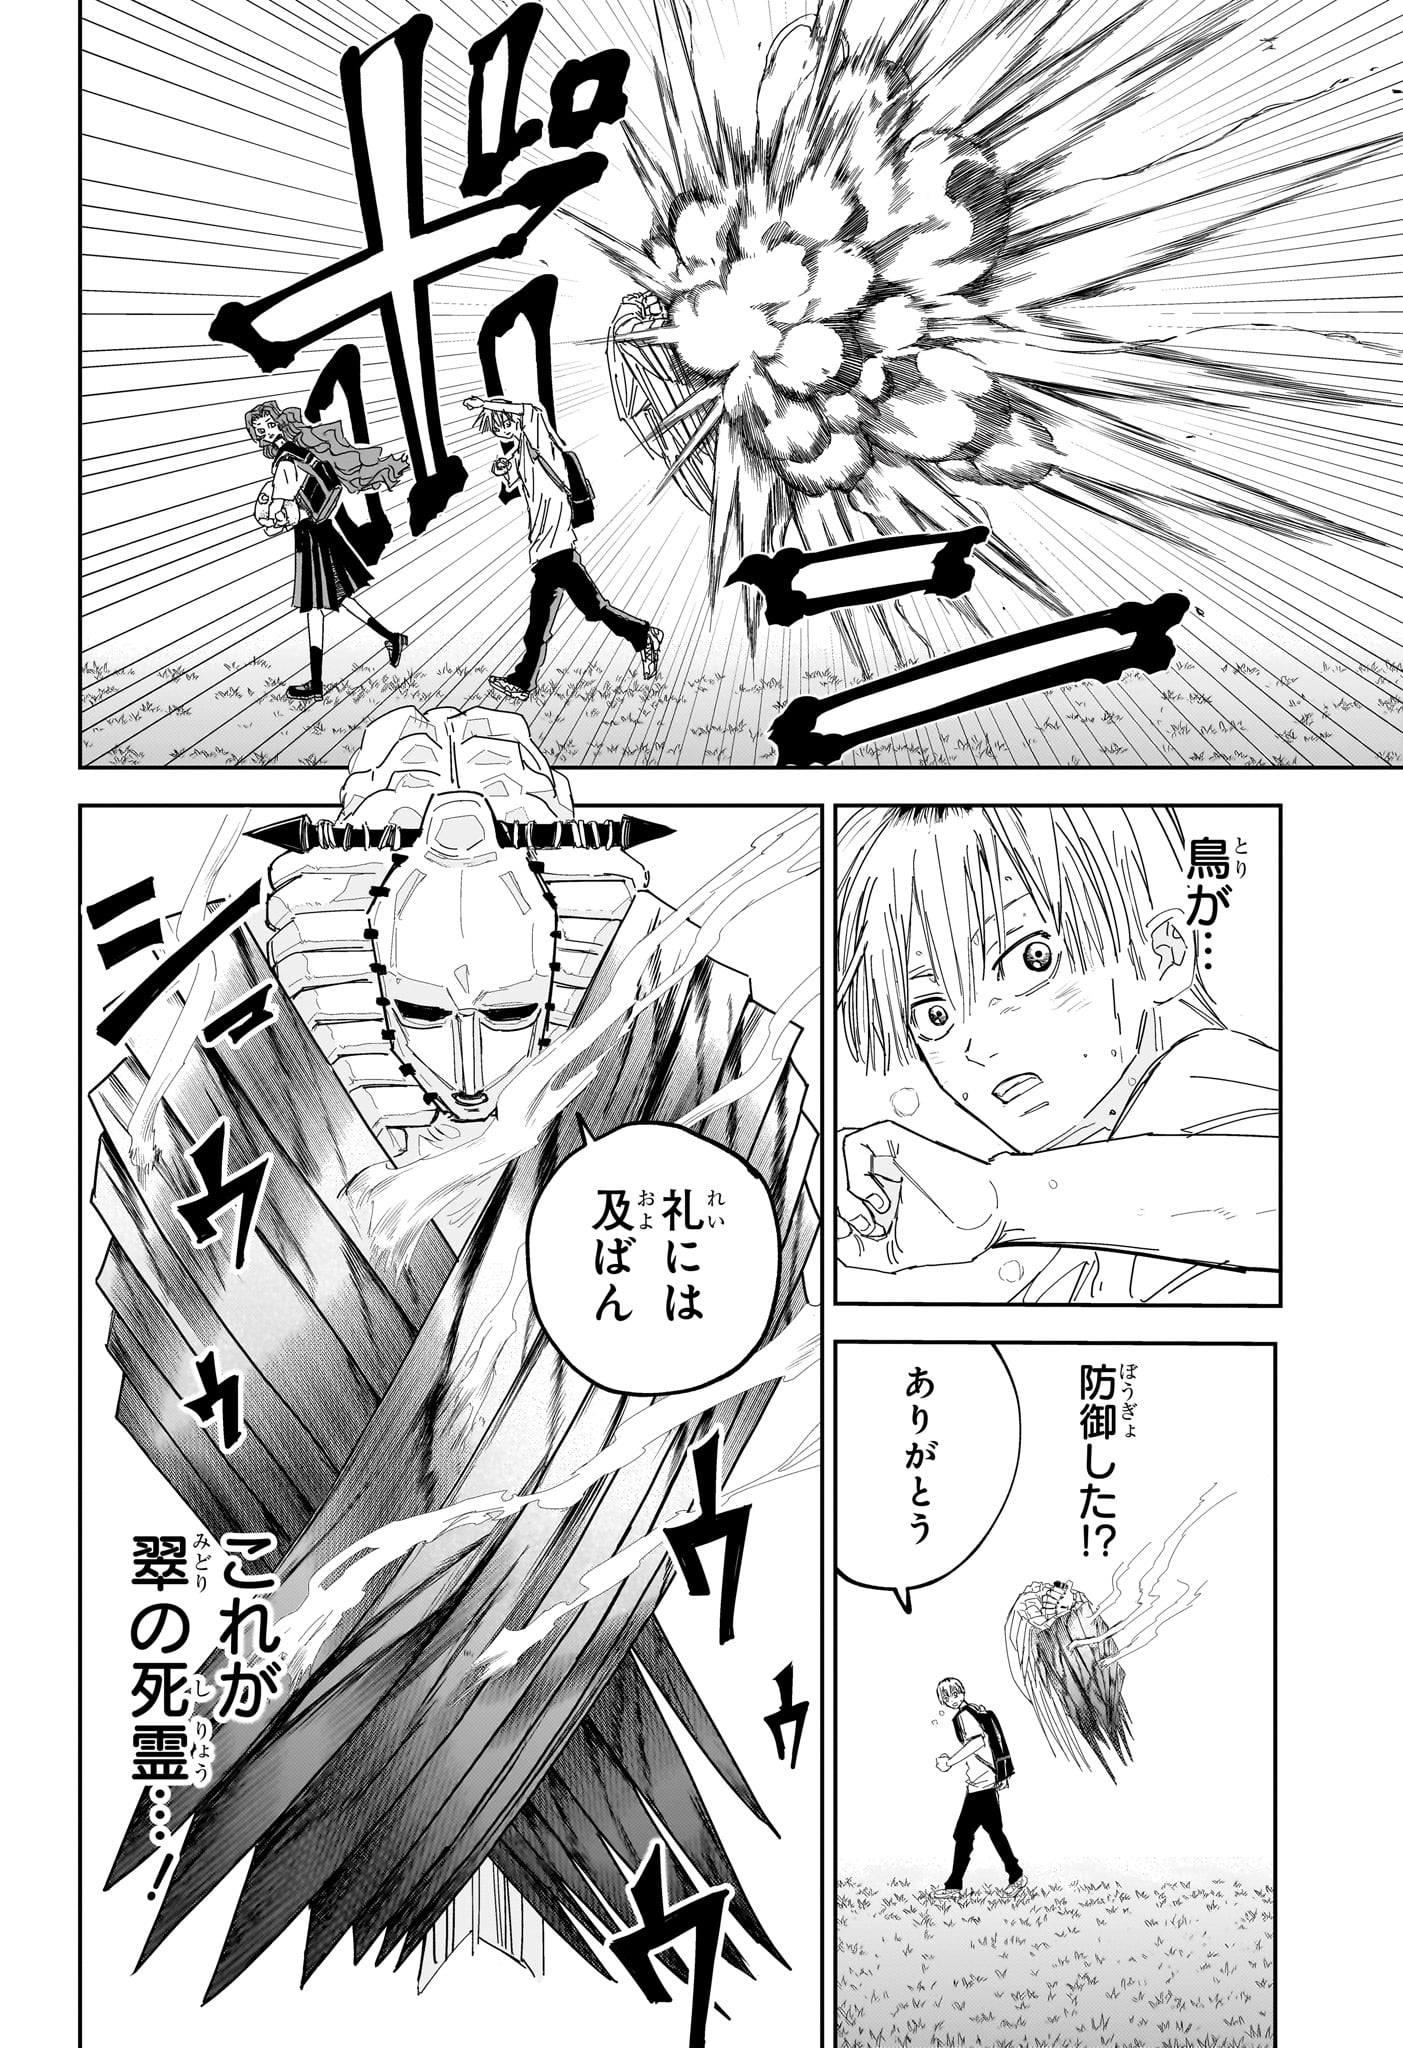 Kyokuto Necromance - Chapter 8 - Page 6